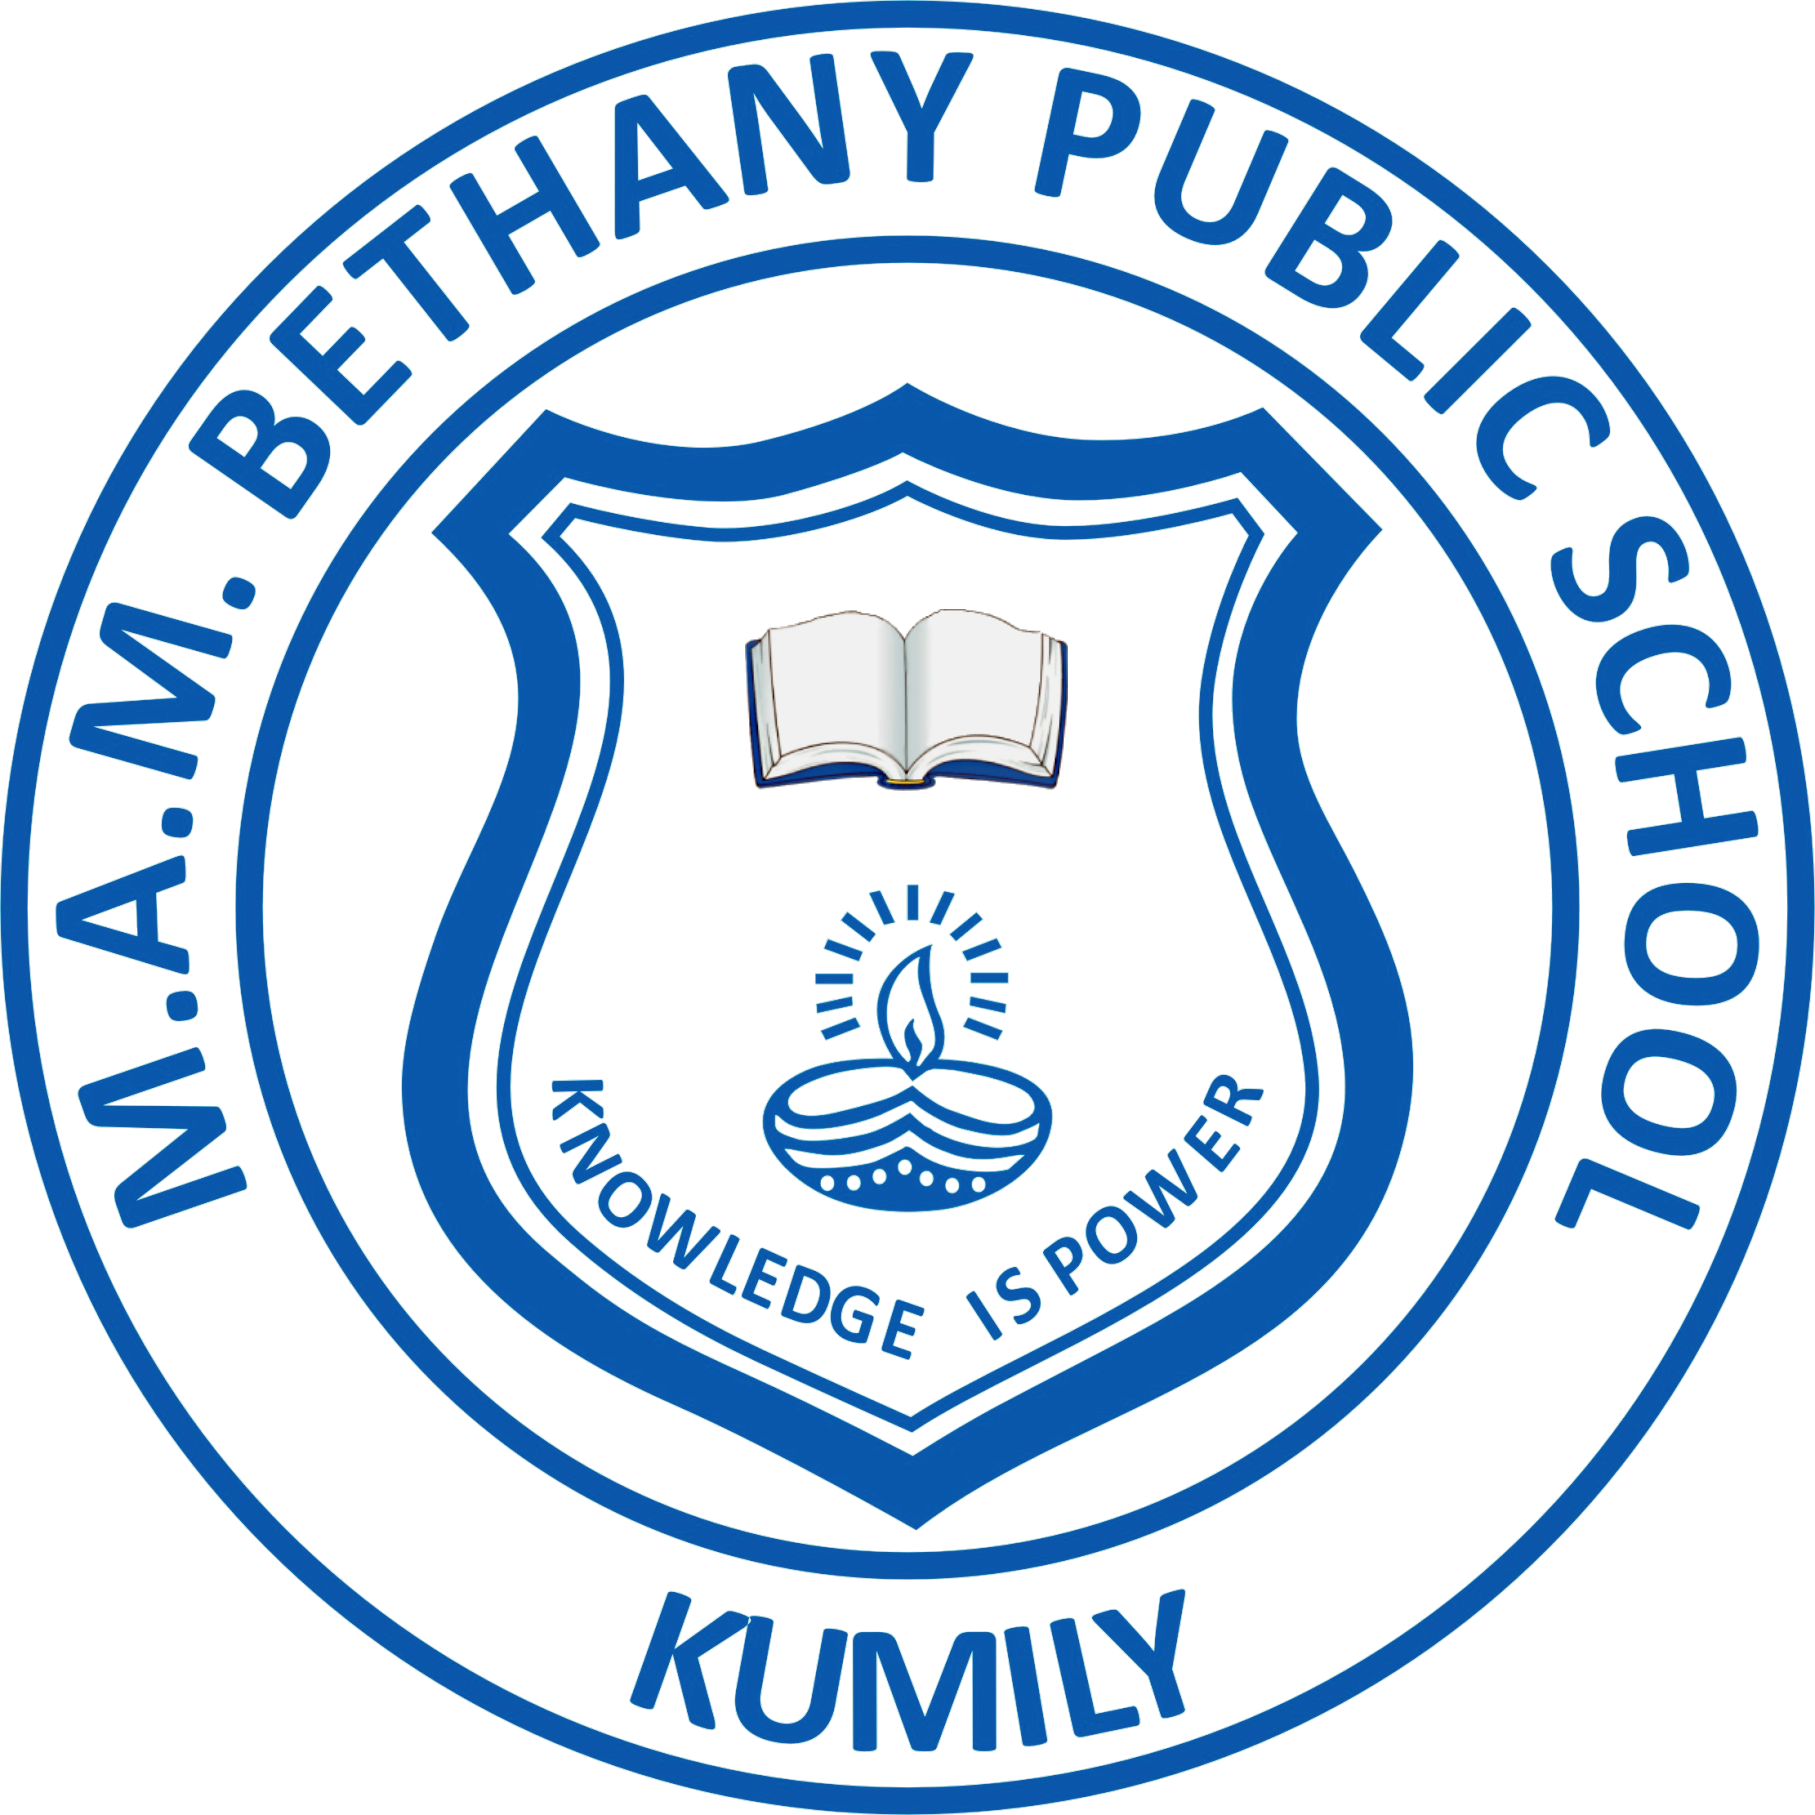 MAM Bethany Public School Logo